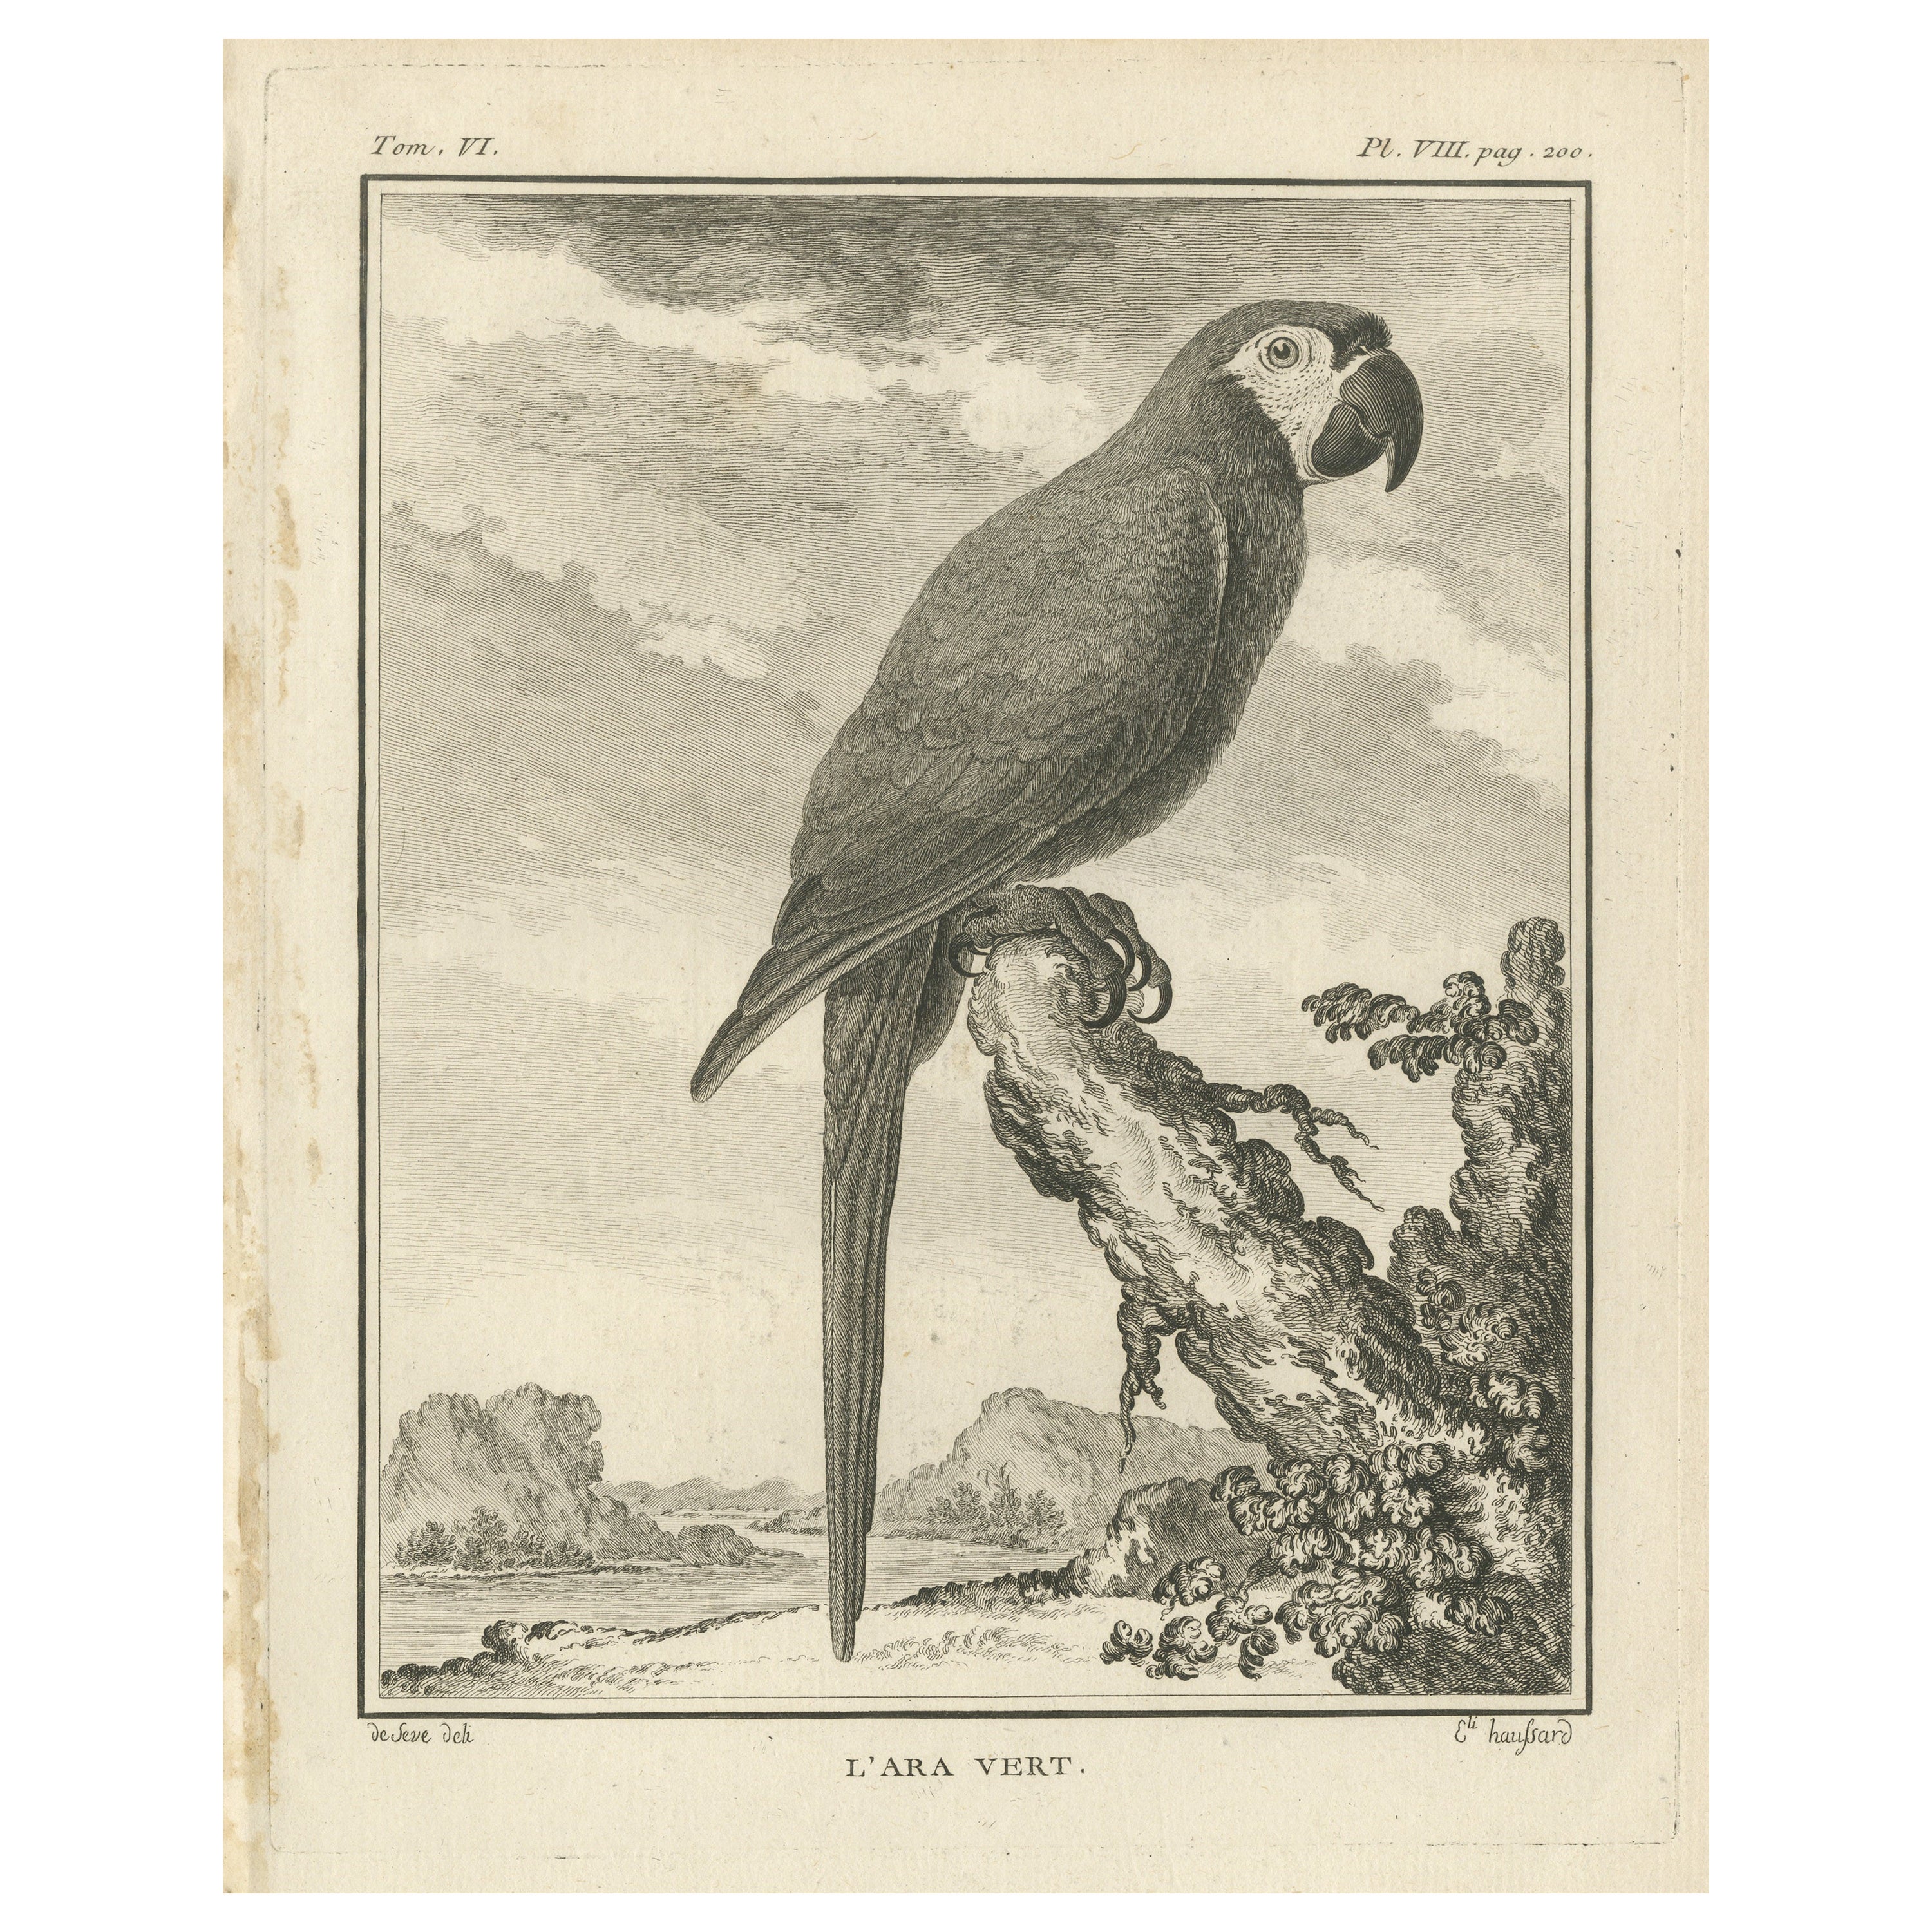 Original Antique Bird Engraving of a Green Macaw